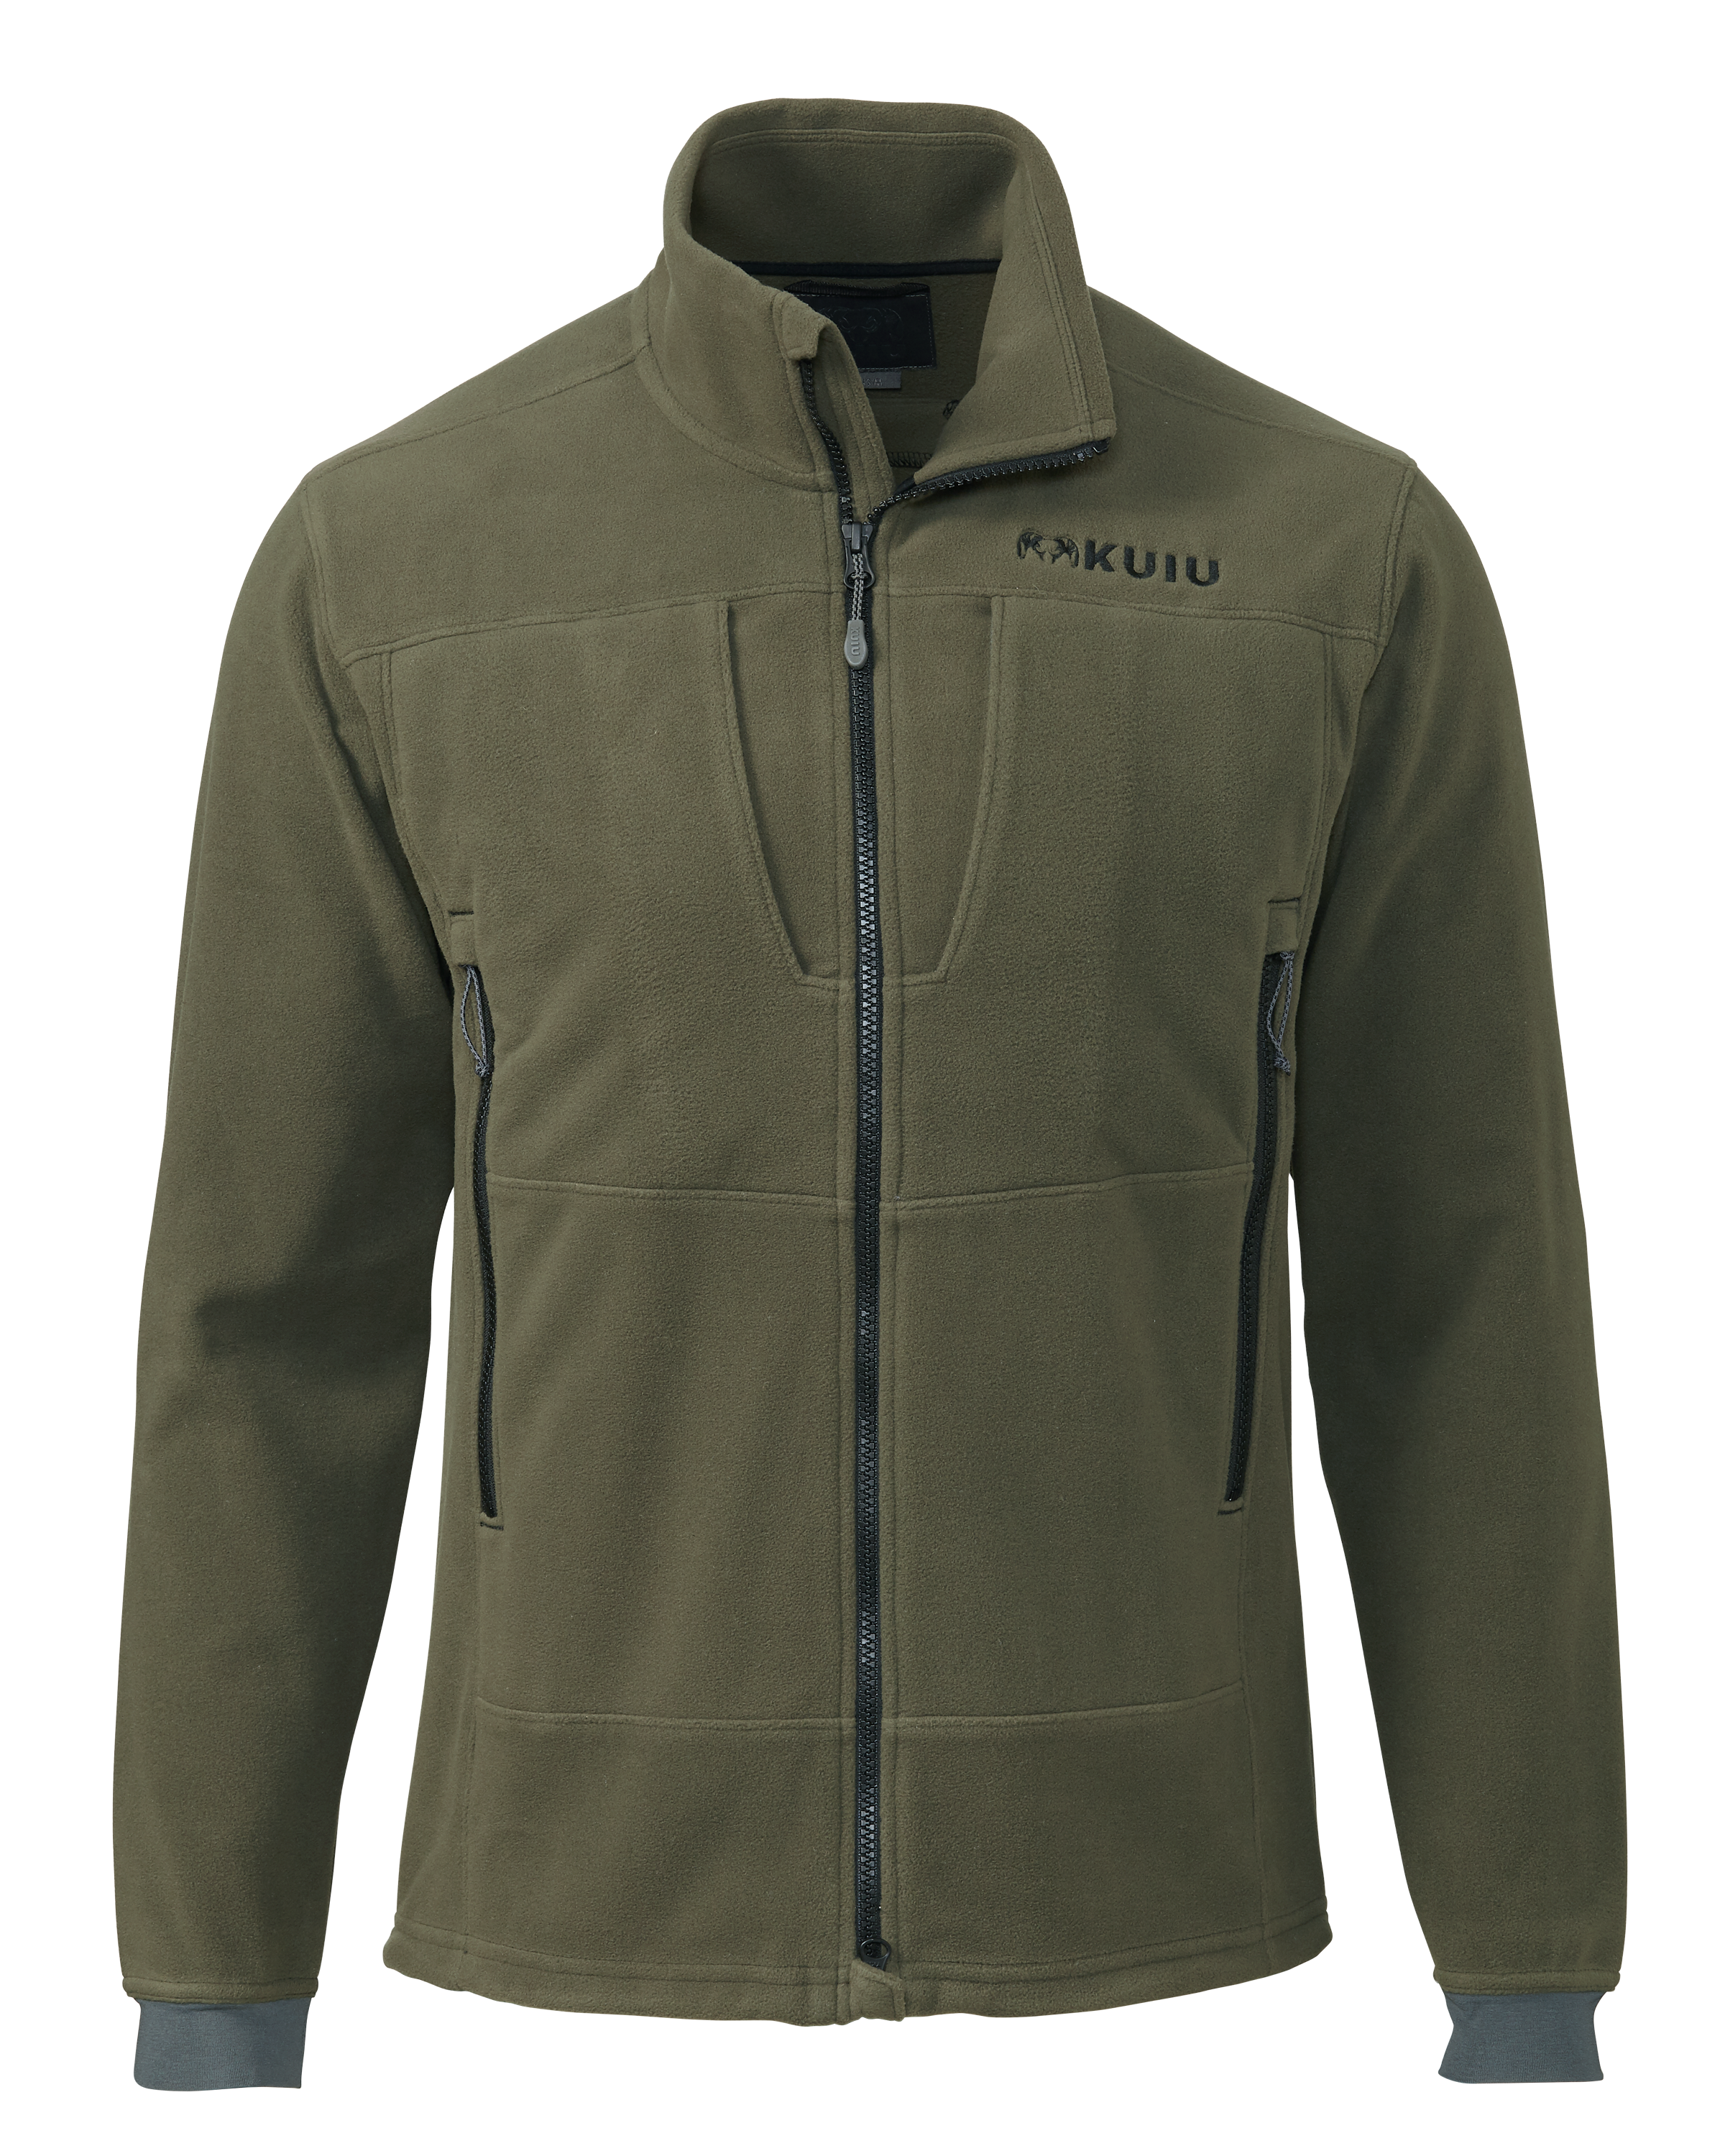 KUIU Wind Pro Fleece Full Zip Hunting Jacket in Olive | Size Small